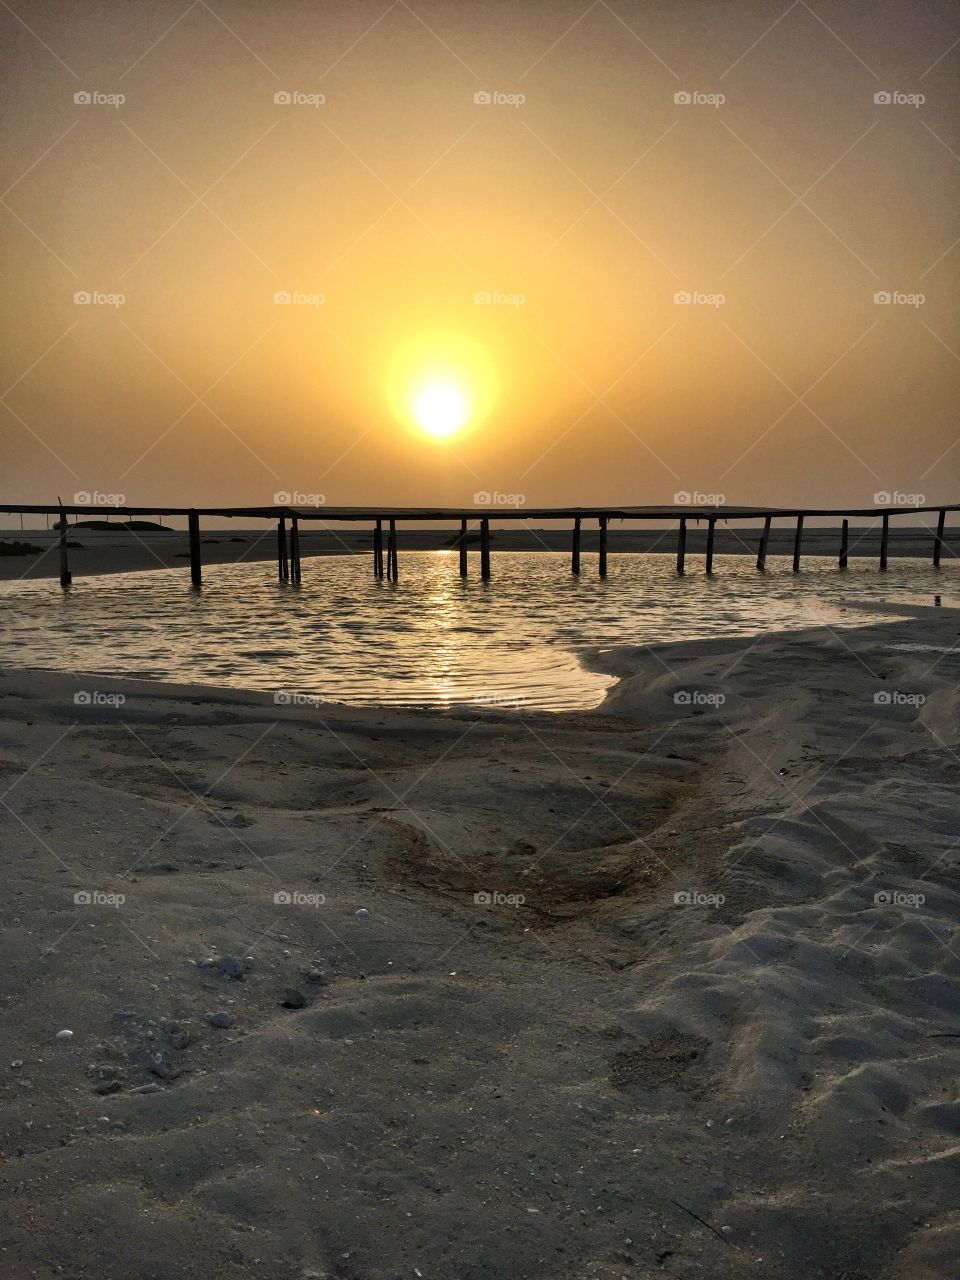 Sunset Pier. Ras Ghurab Island, Abu Dhabi, United Arab Emirates.